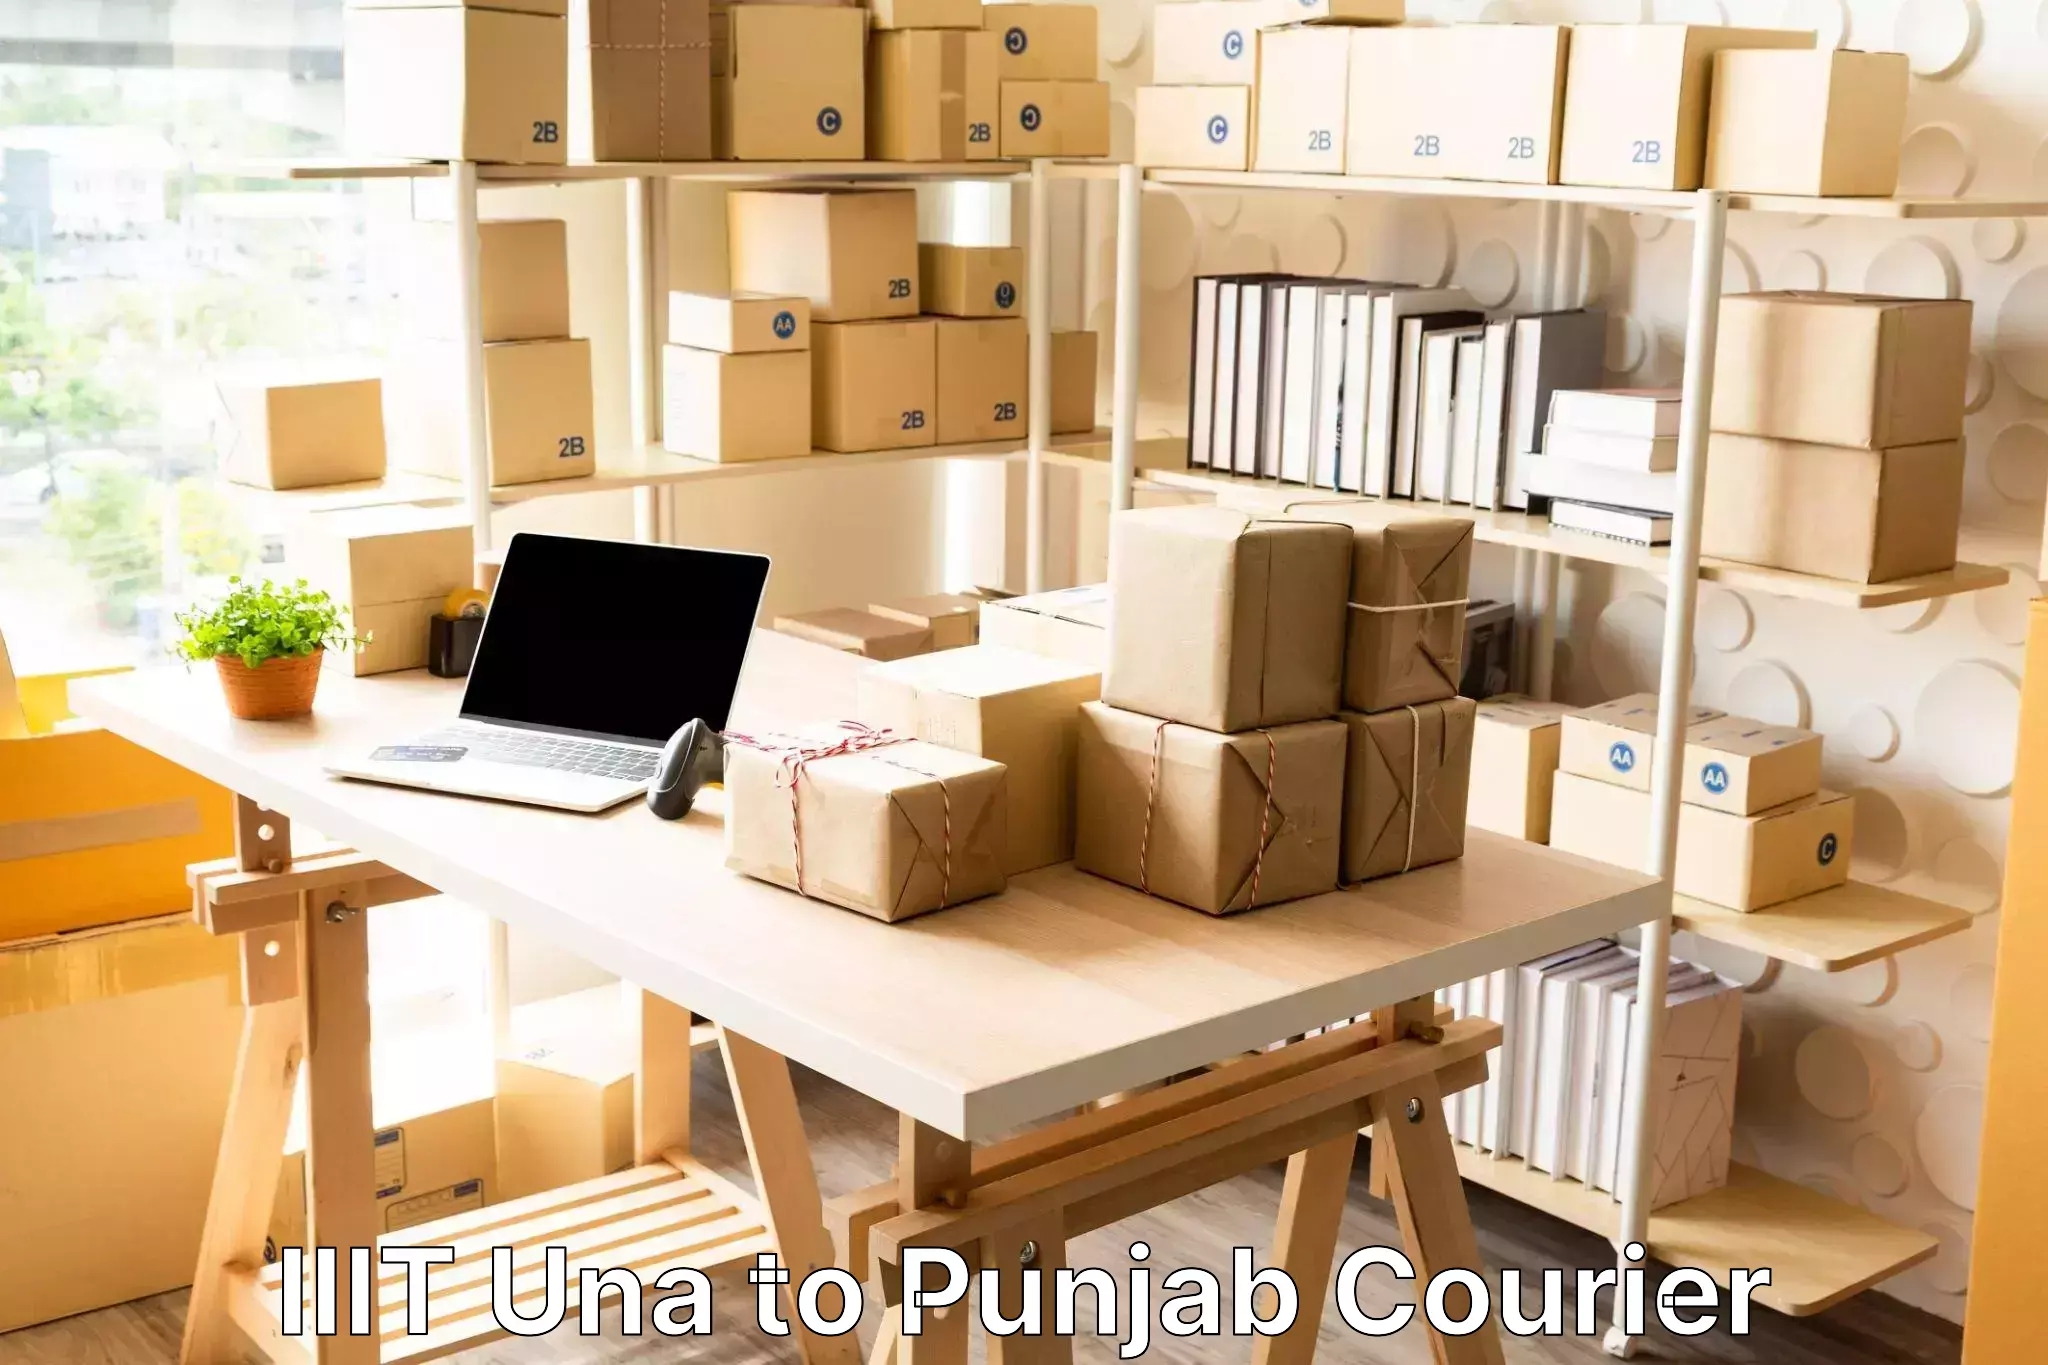 Efficient luggage delivery IIIT Una to Punjab